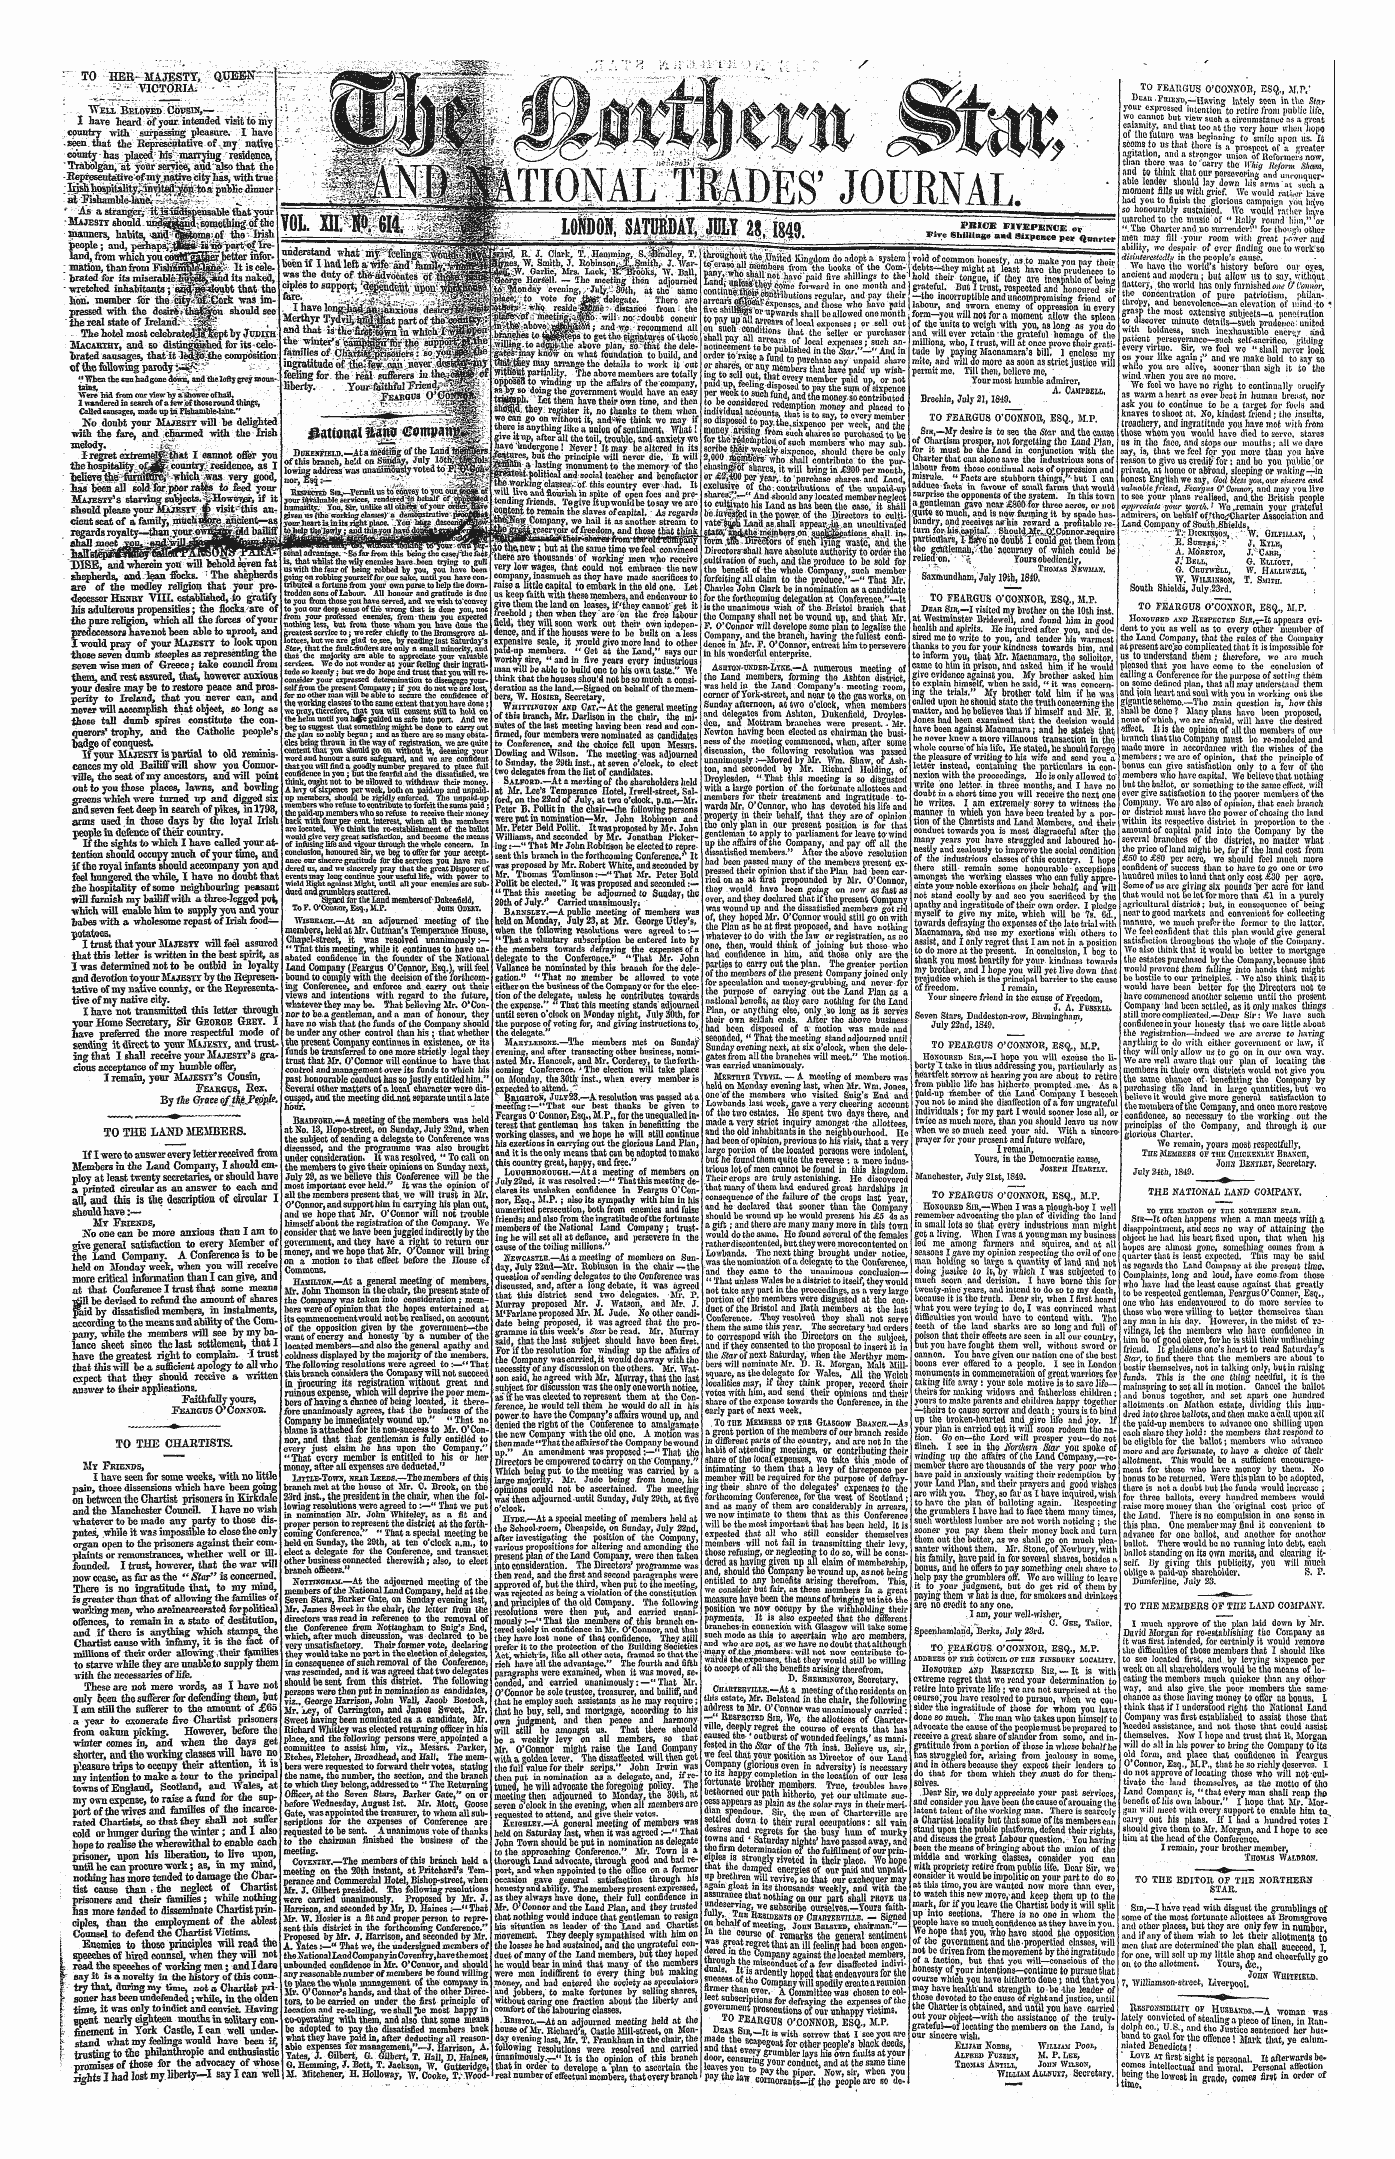 Northern Star (1837-1852): jS F Y, 1st edition - National L| I&Lt;E0m» I§^